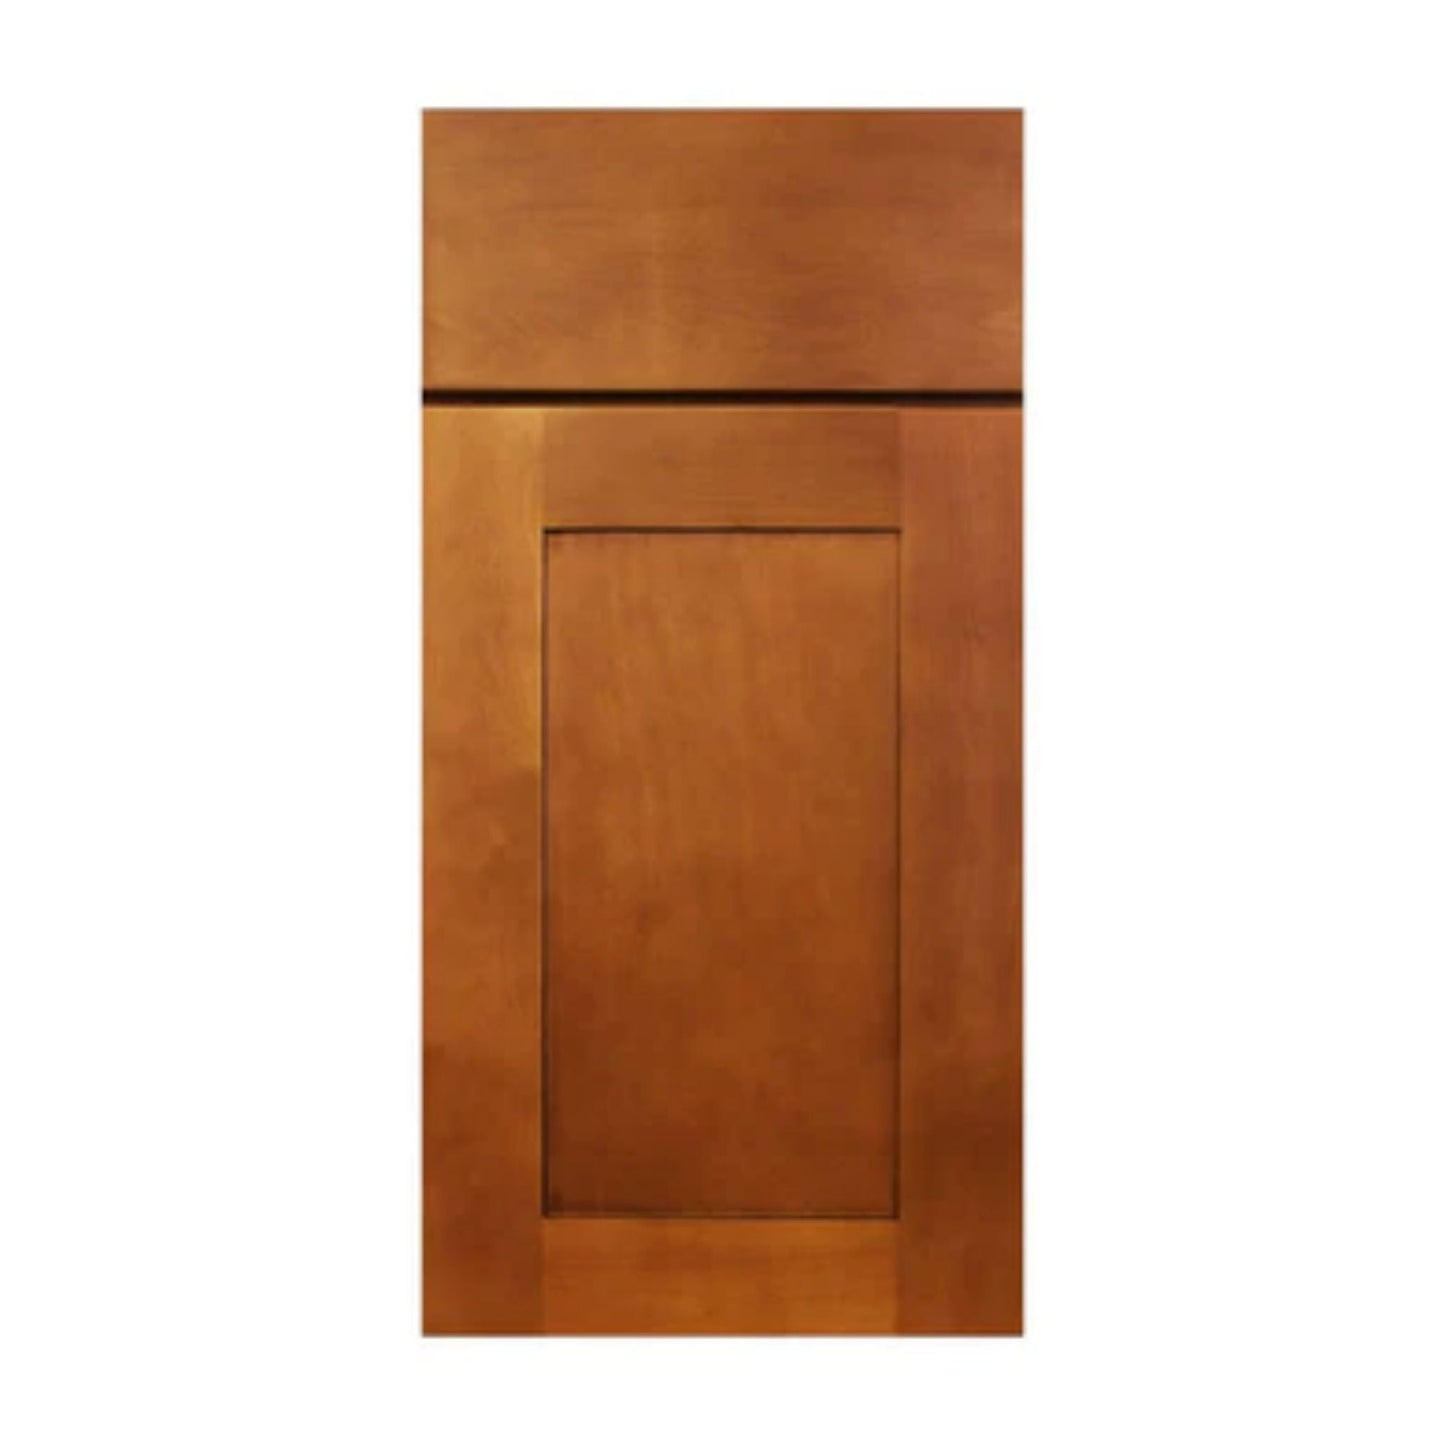 LessCare 24" x 42" x 12" Newport Wall Kitchen Cabinet - W2442